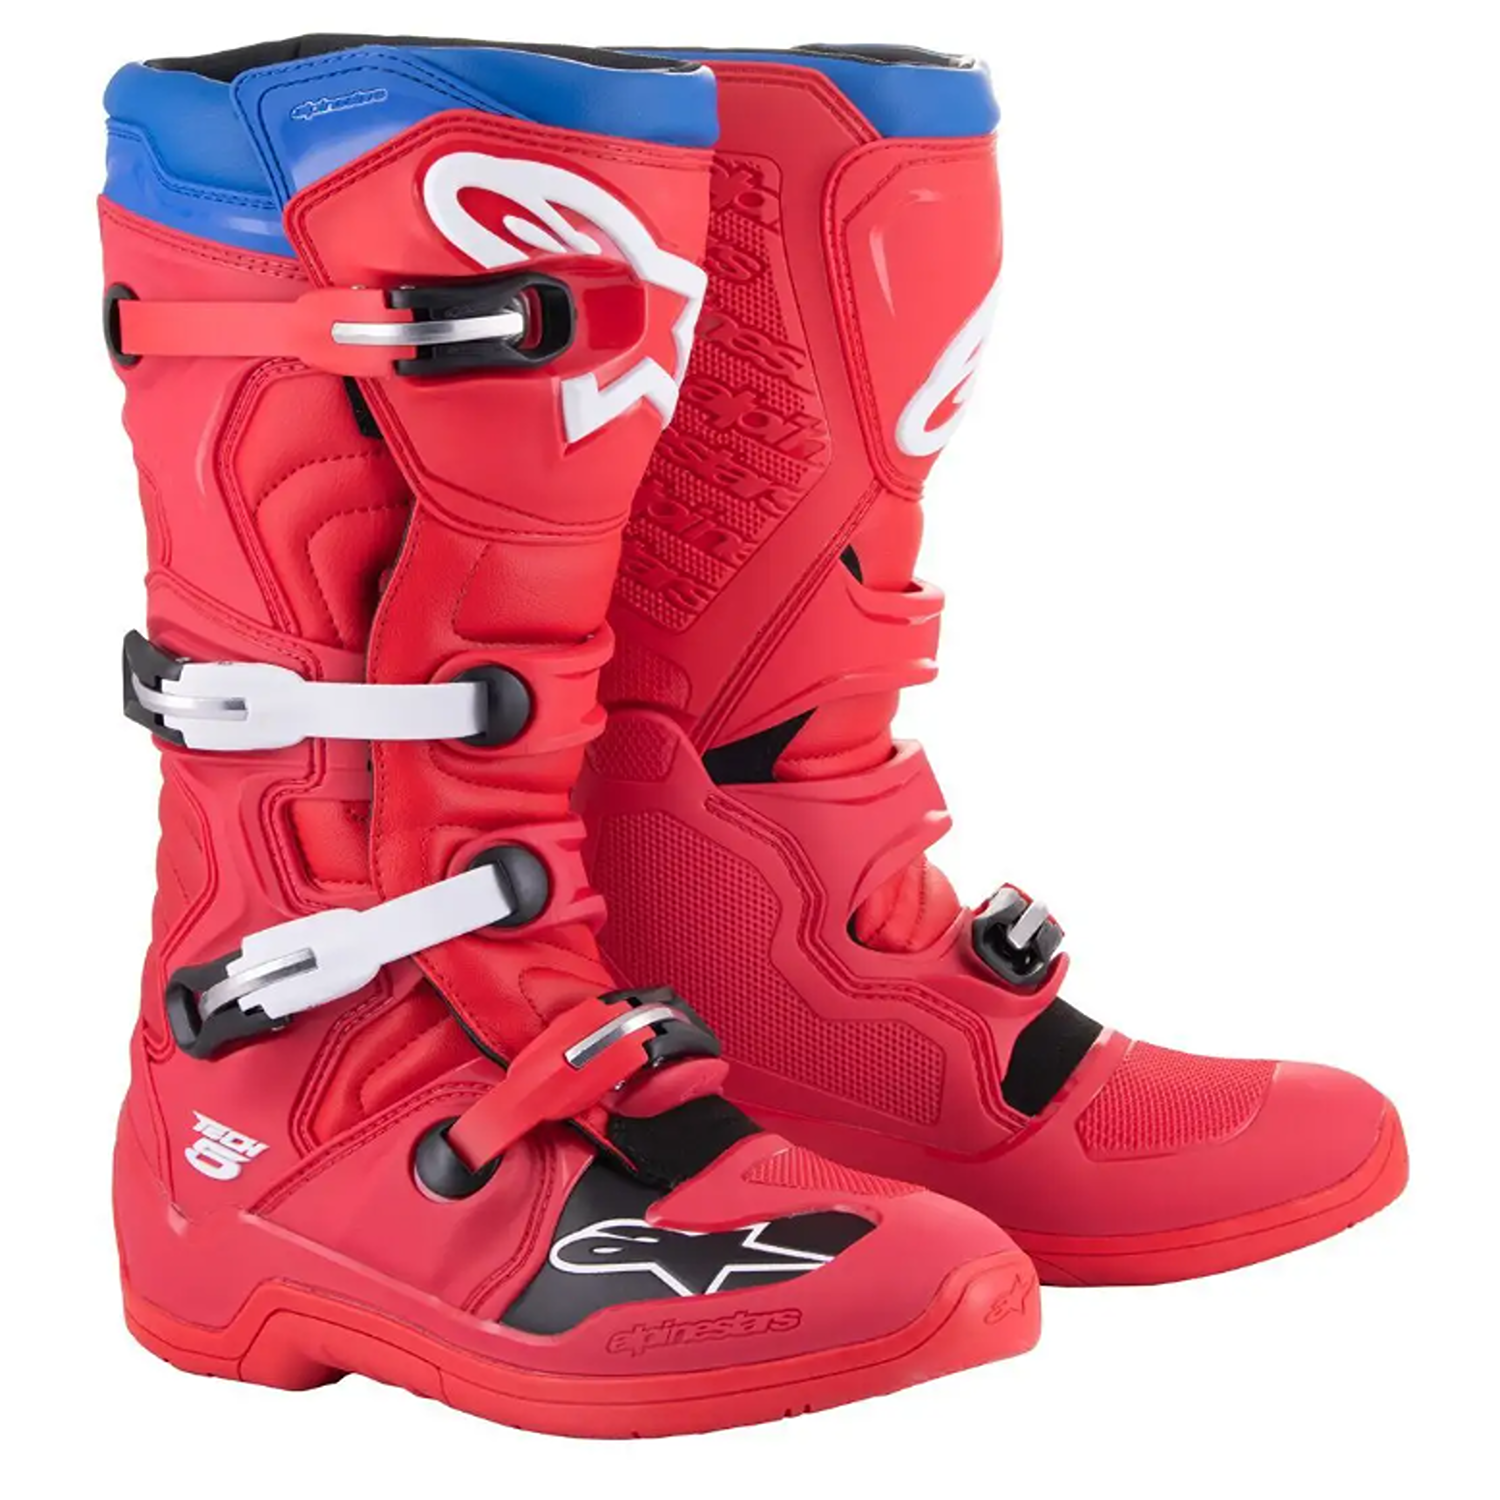 Image of Alpinestars Tech 5 Boots Bright Red Dark Red Blue Size US 10 EN